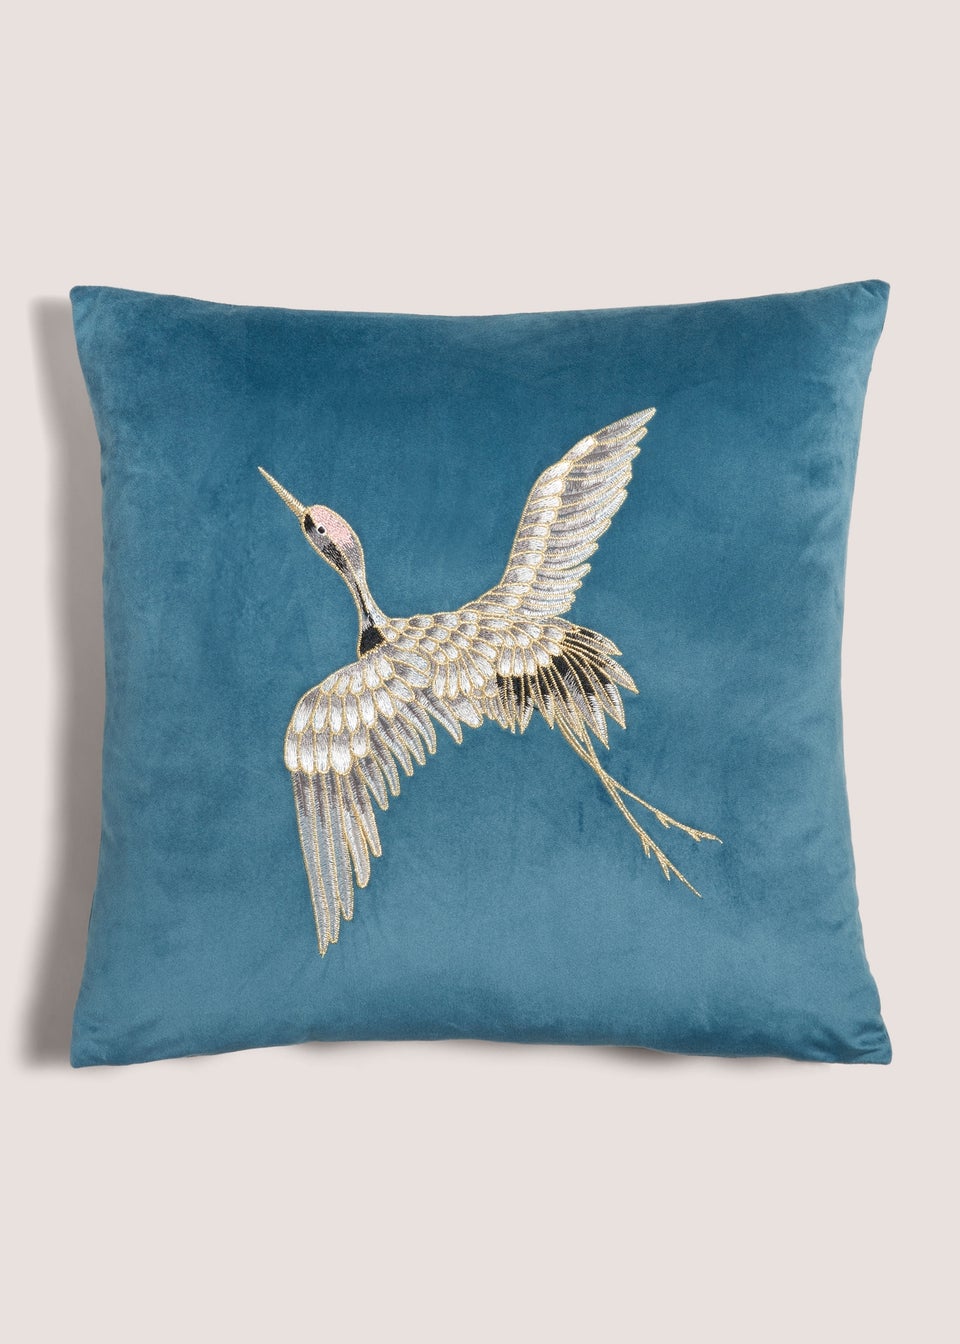 Teal Embroidered Crane Cushion (43cm x 43cm)